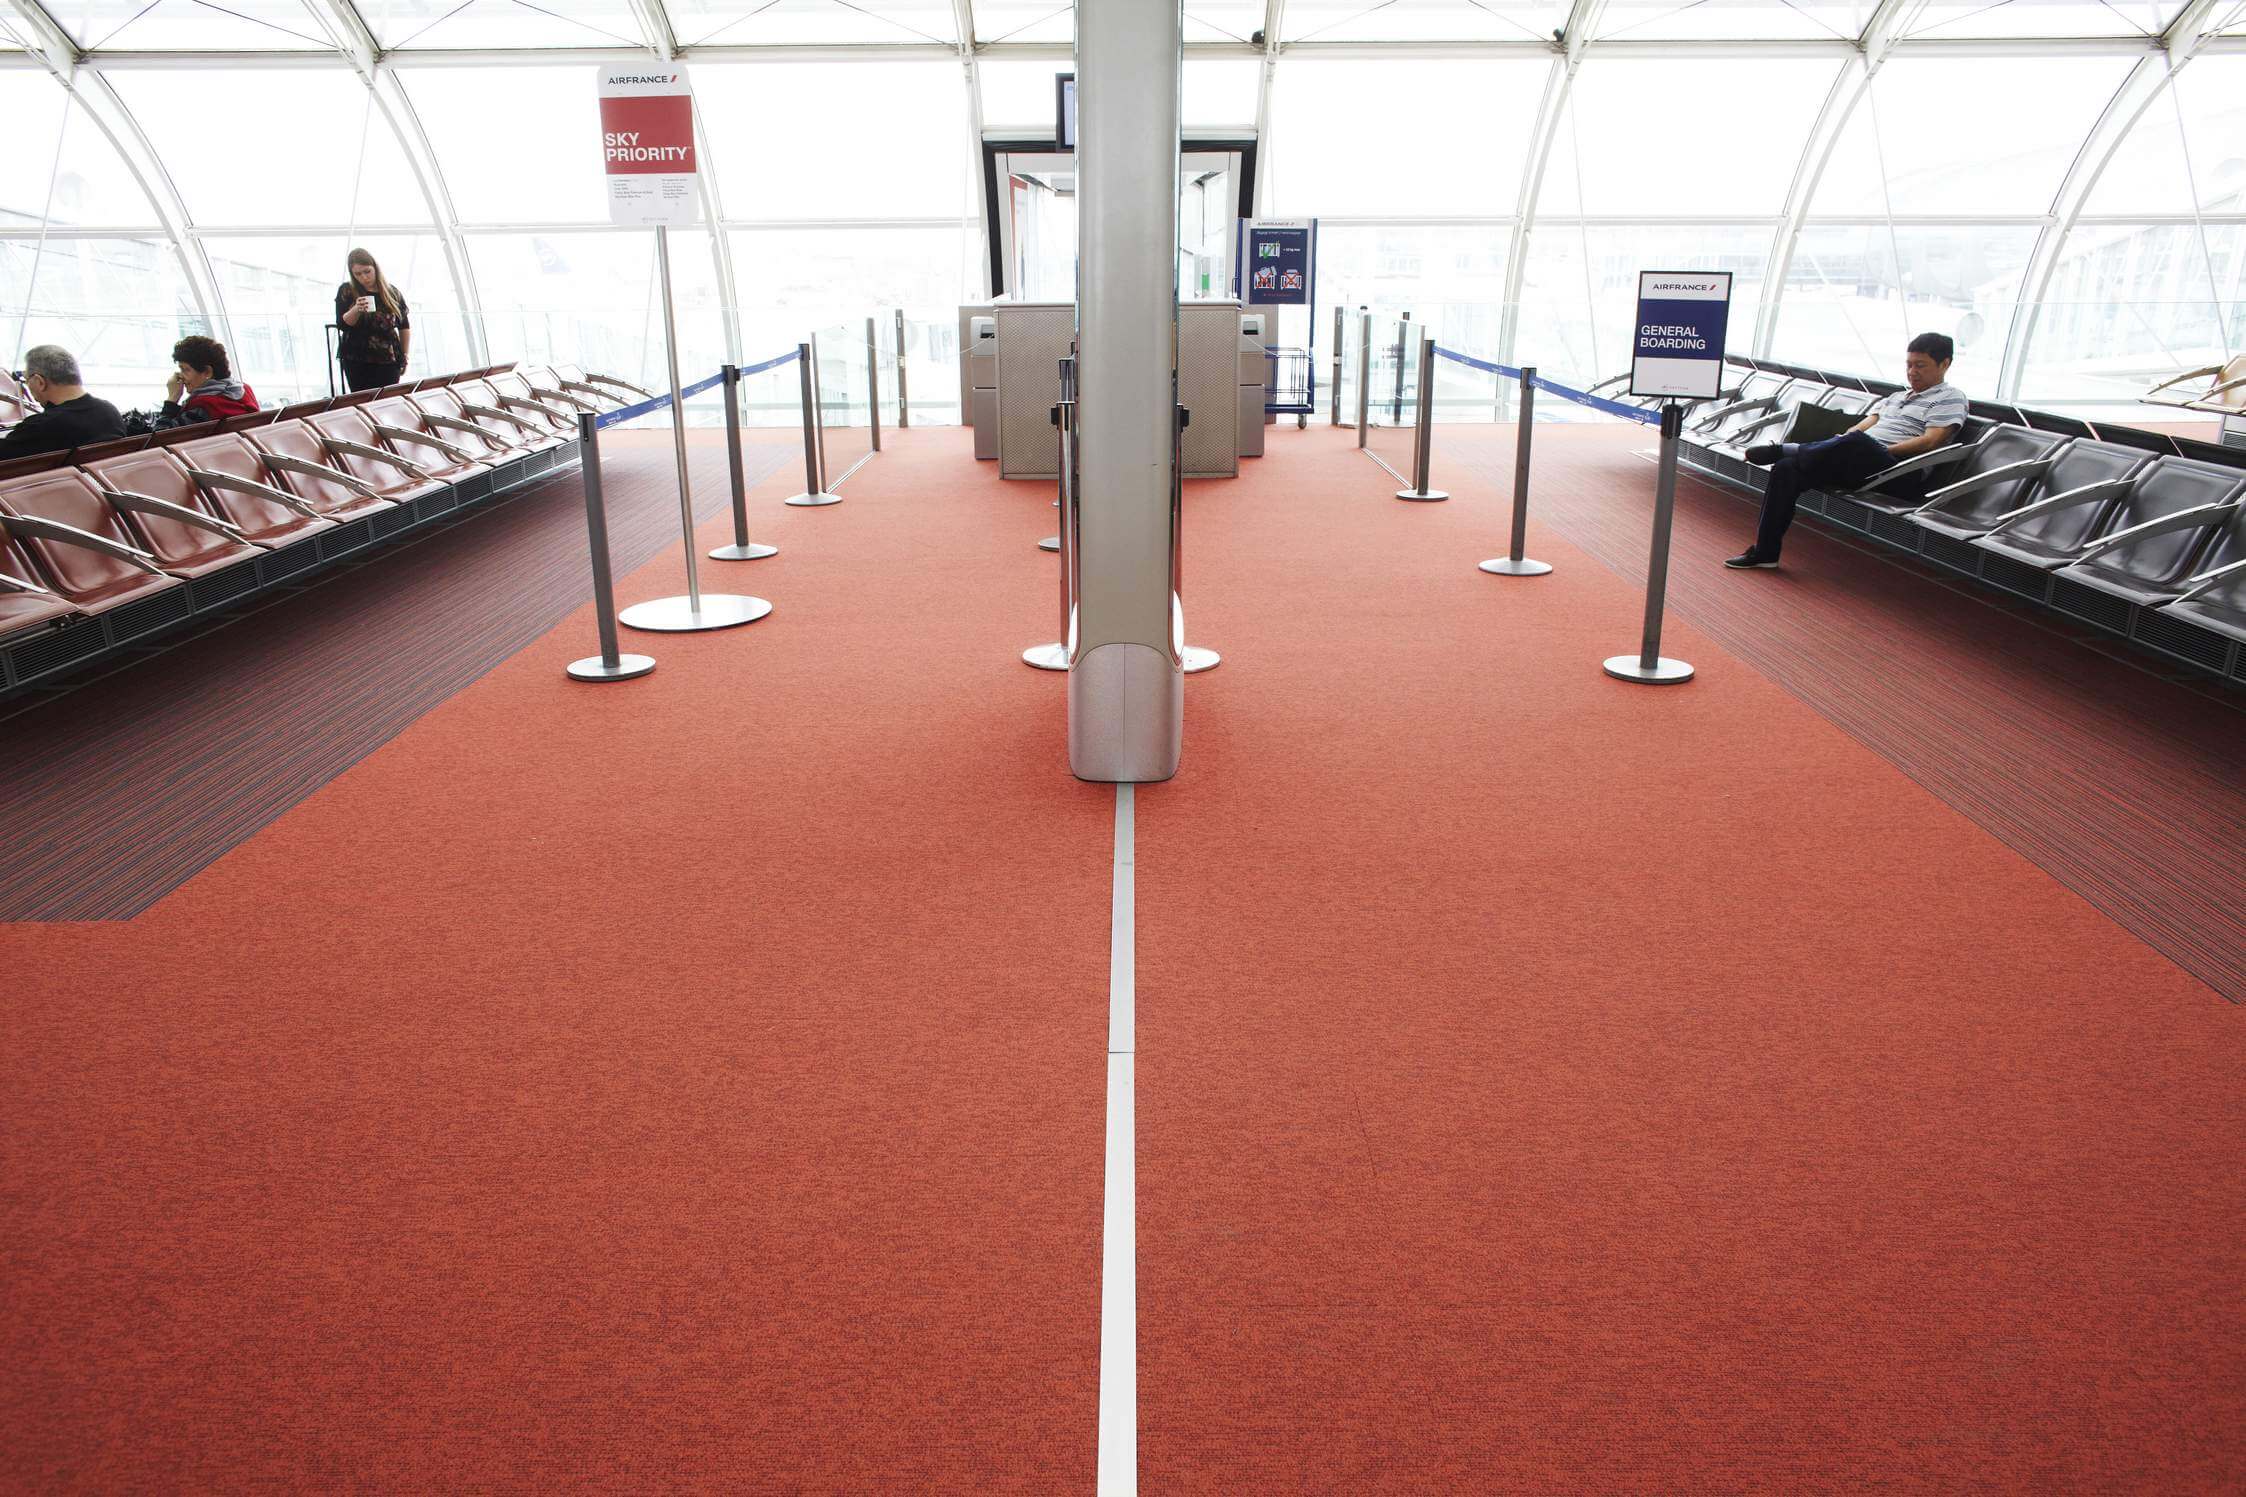 Suka Kepo Kenapa di Airport Banyak Karpet? Ini Lho Alasannya